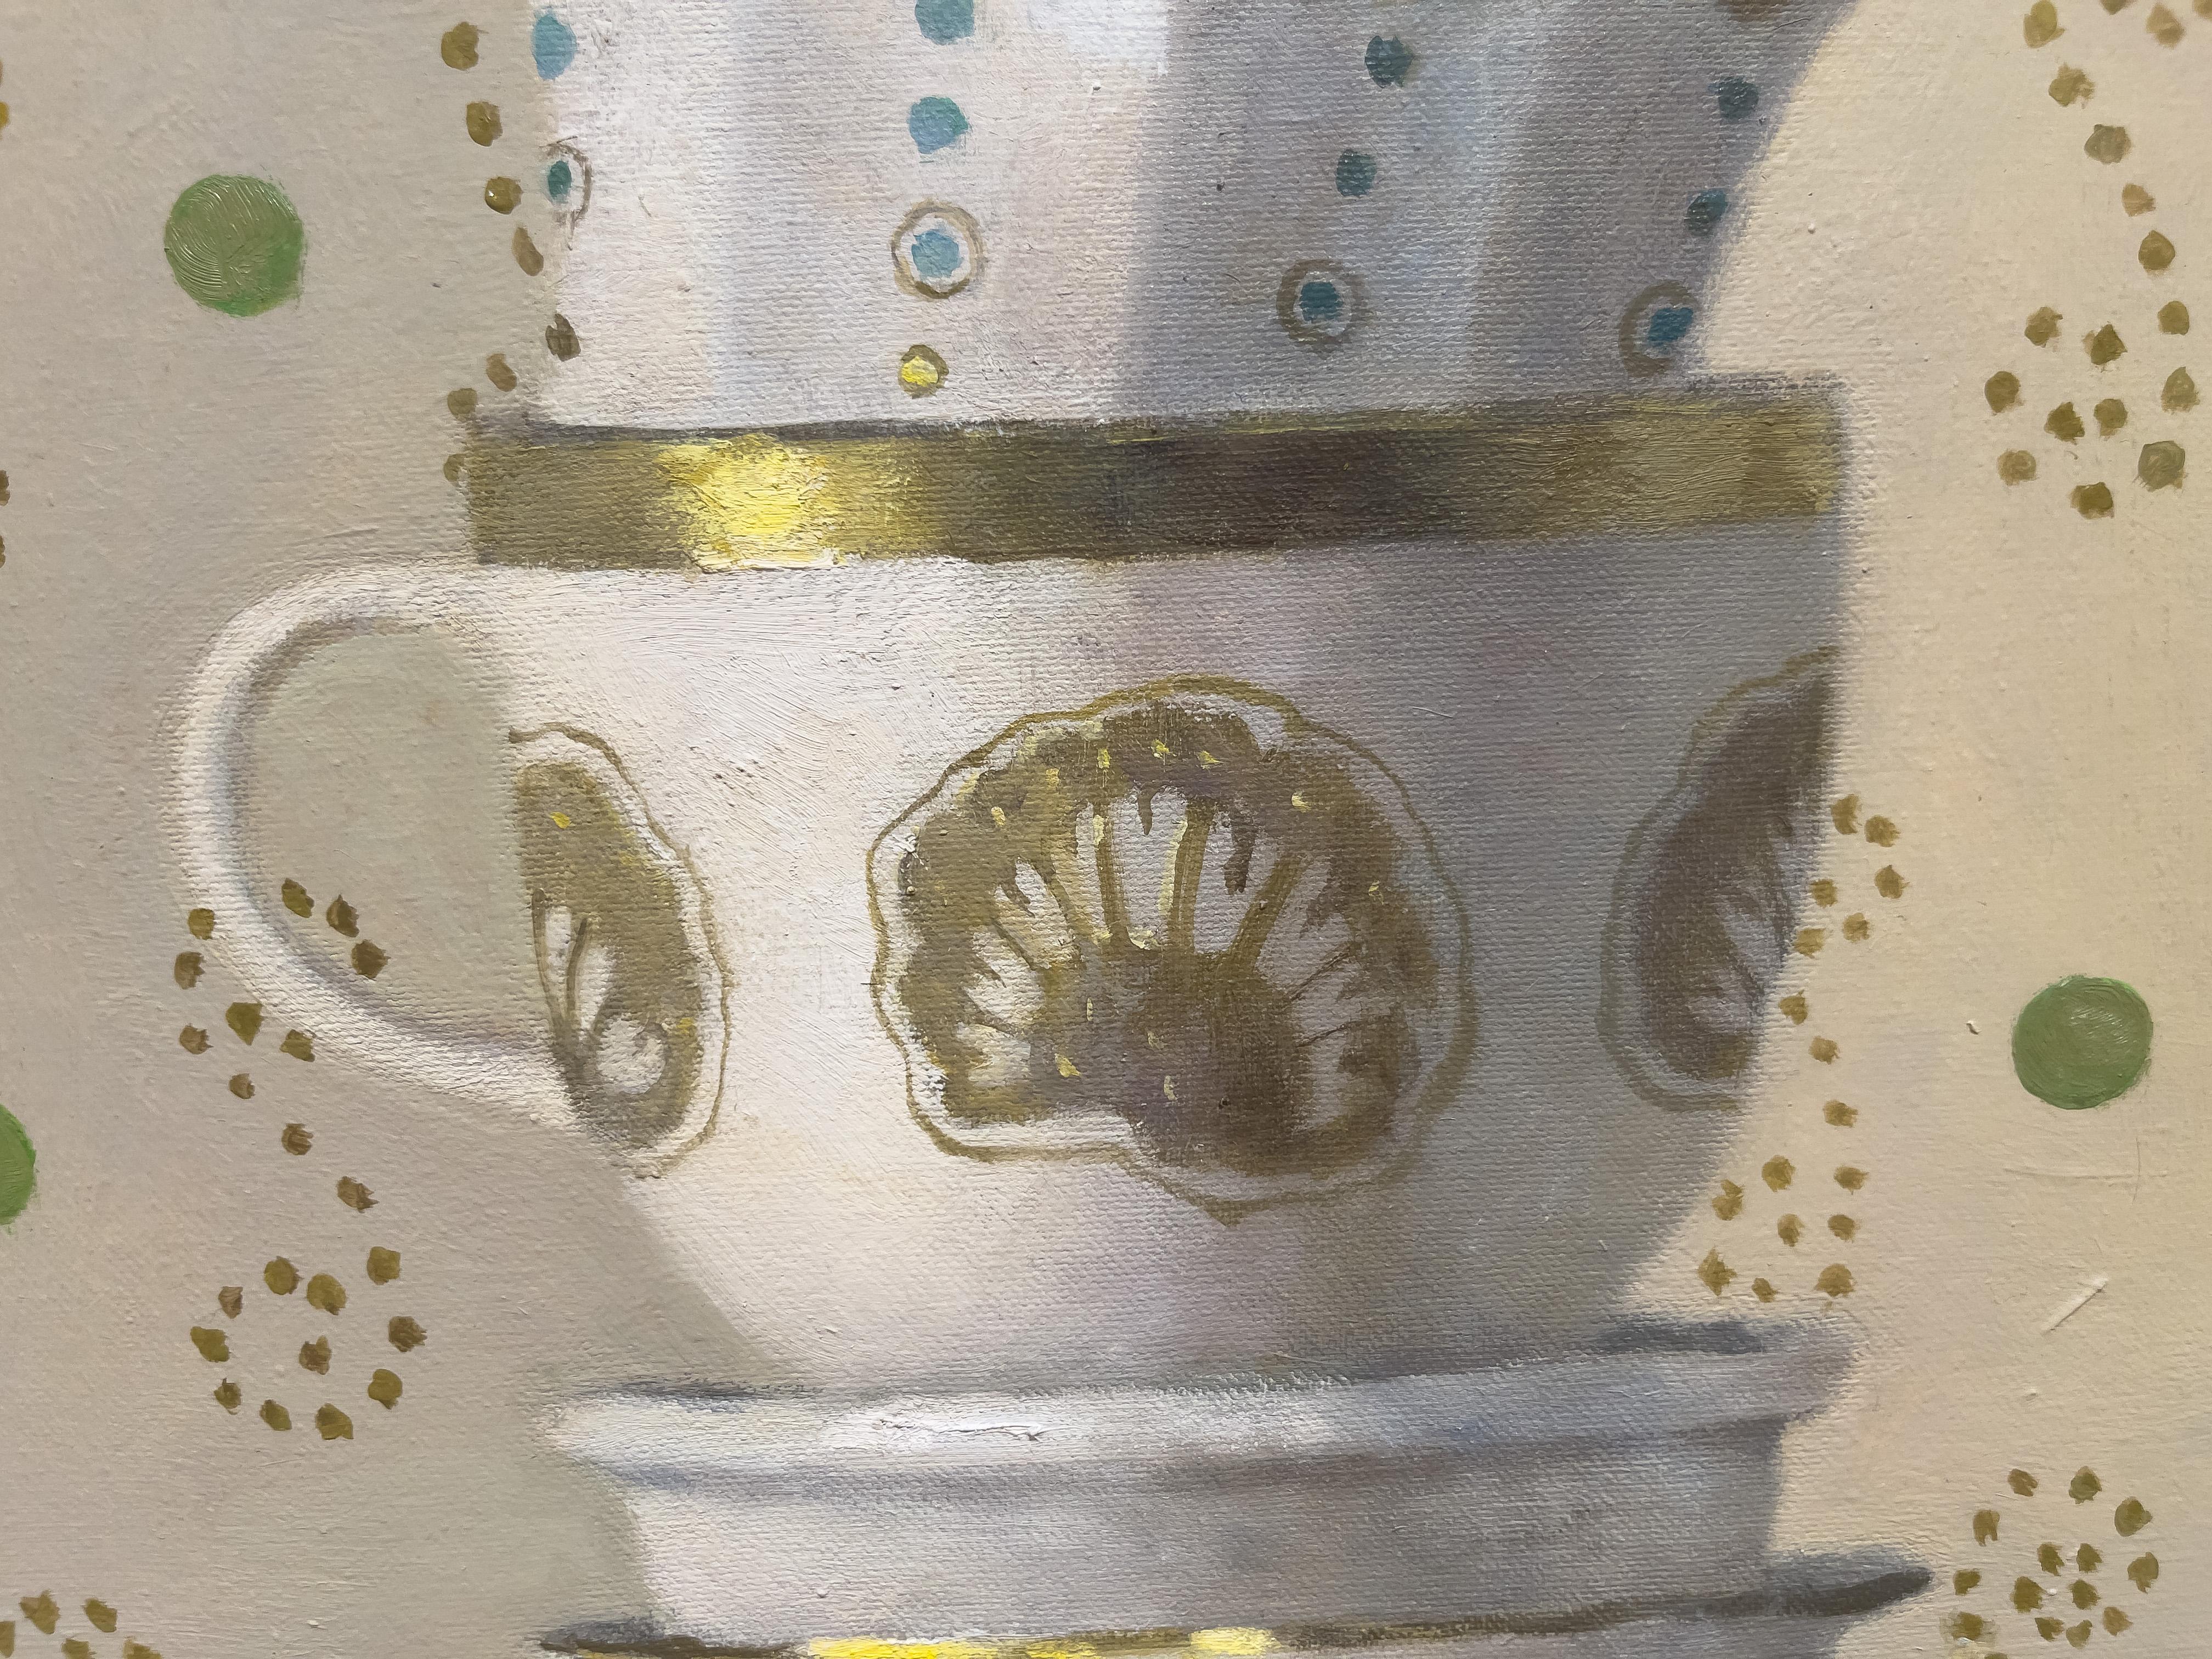 TOWER WITH GOLD SHELL CUP – Stillleben, Teebecher, Realismus (Grau), Still-Life Painting, von Olga Antonova